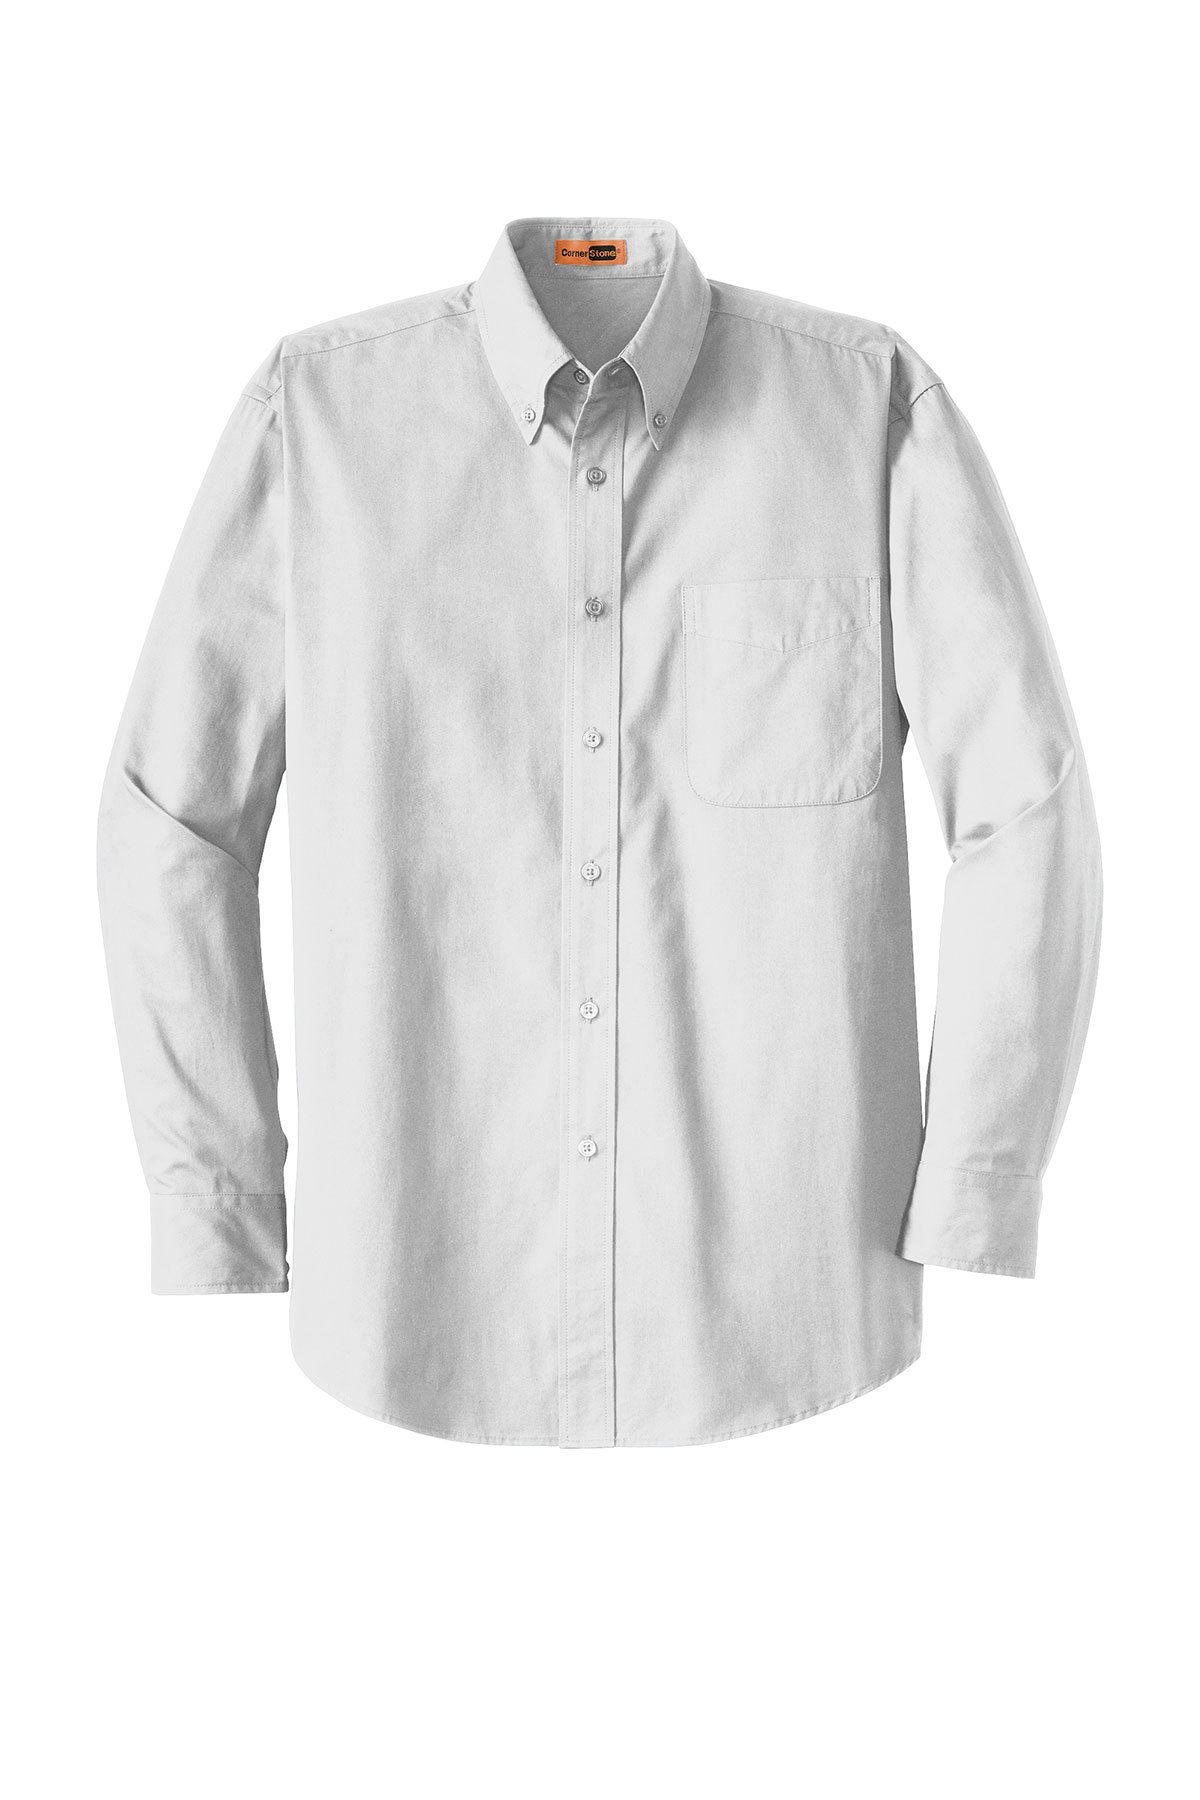 CornerStone - Long Sleeve SuperPro ™ Twill Shirt | Product | SanMar